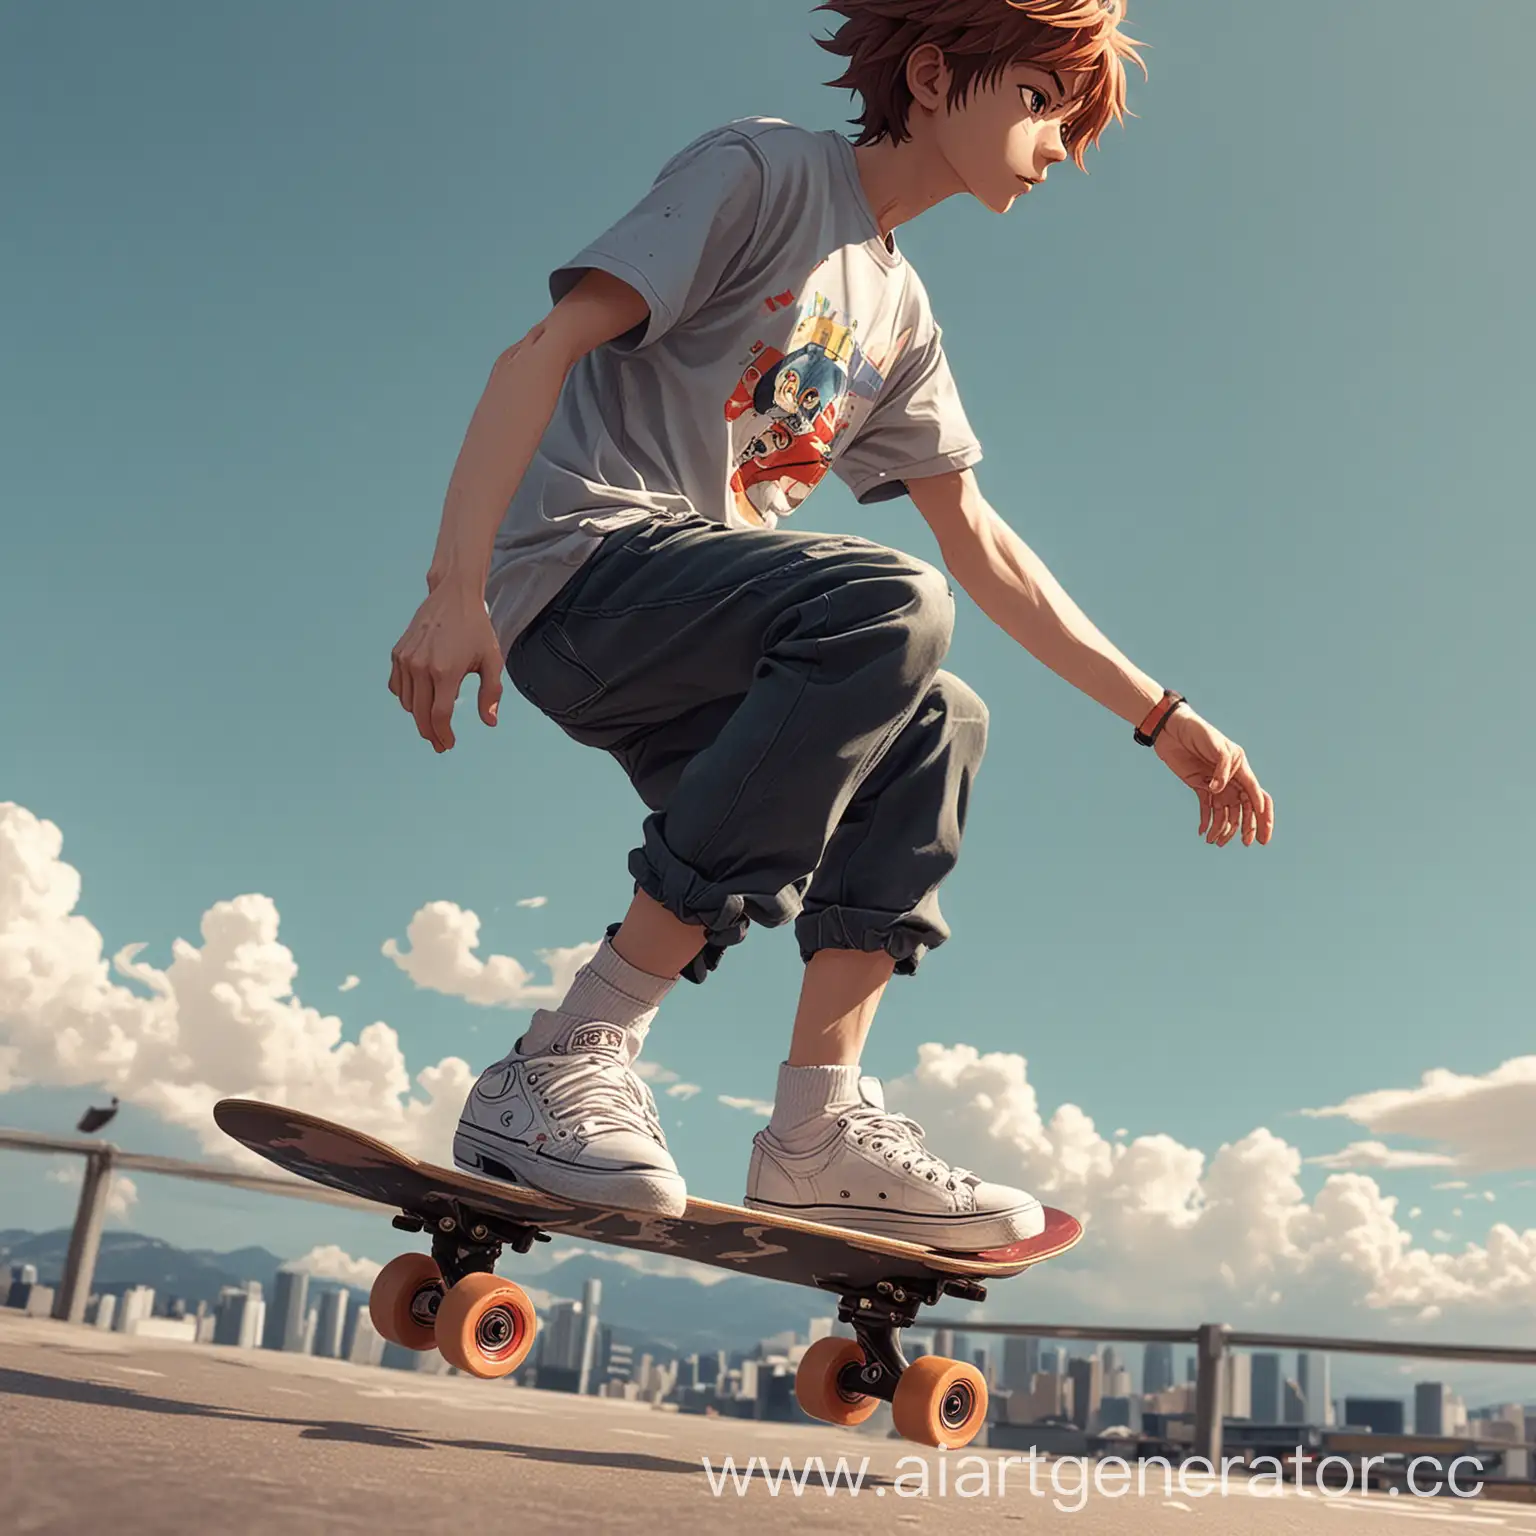 Anime-Style-Skateboard-Rider-in-Urban-Setting